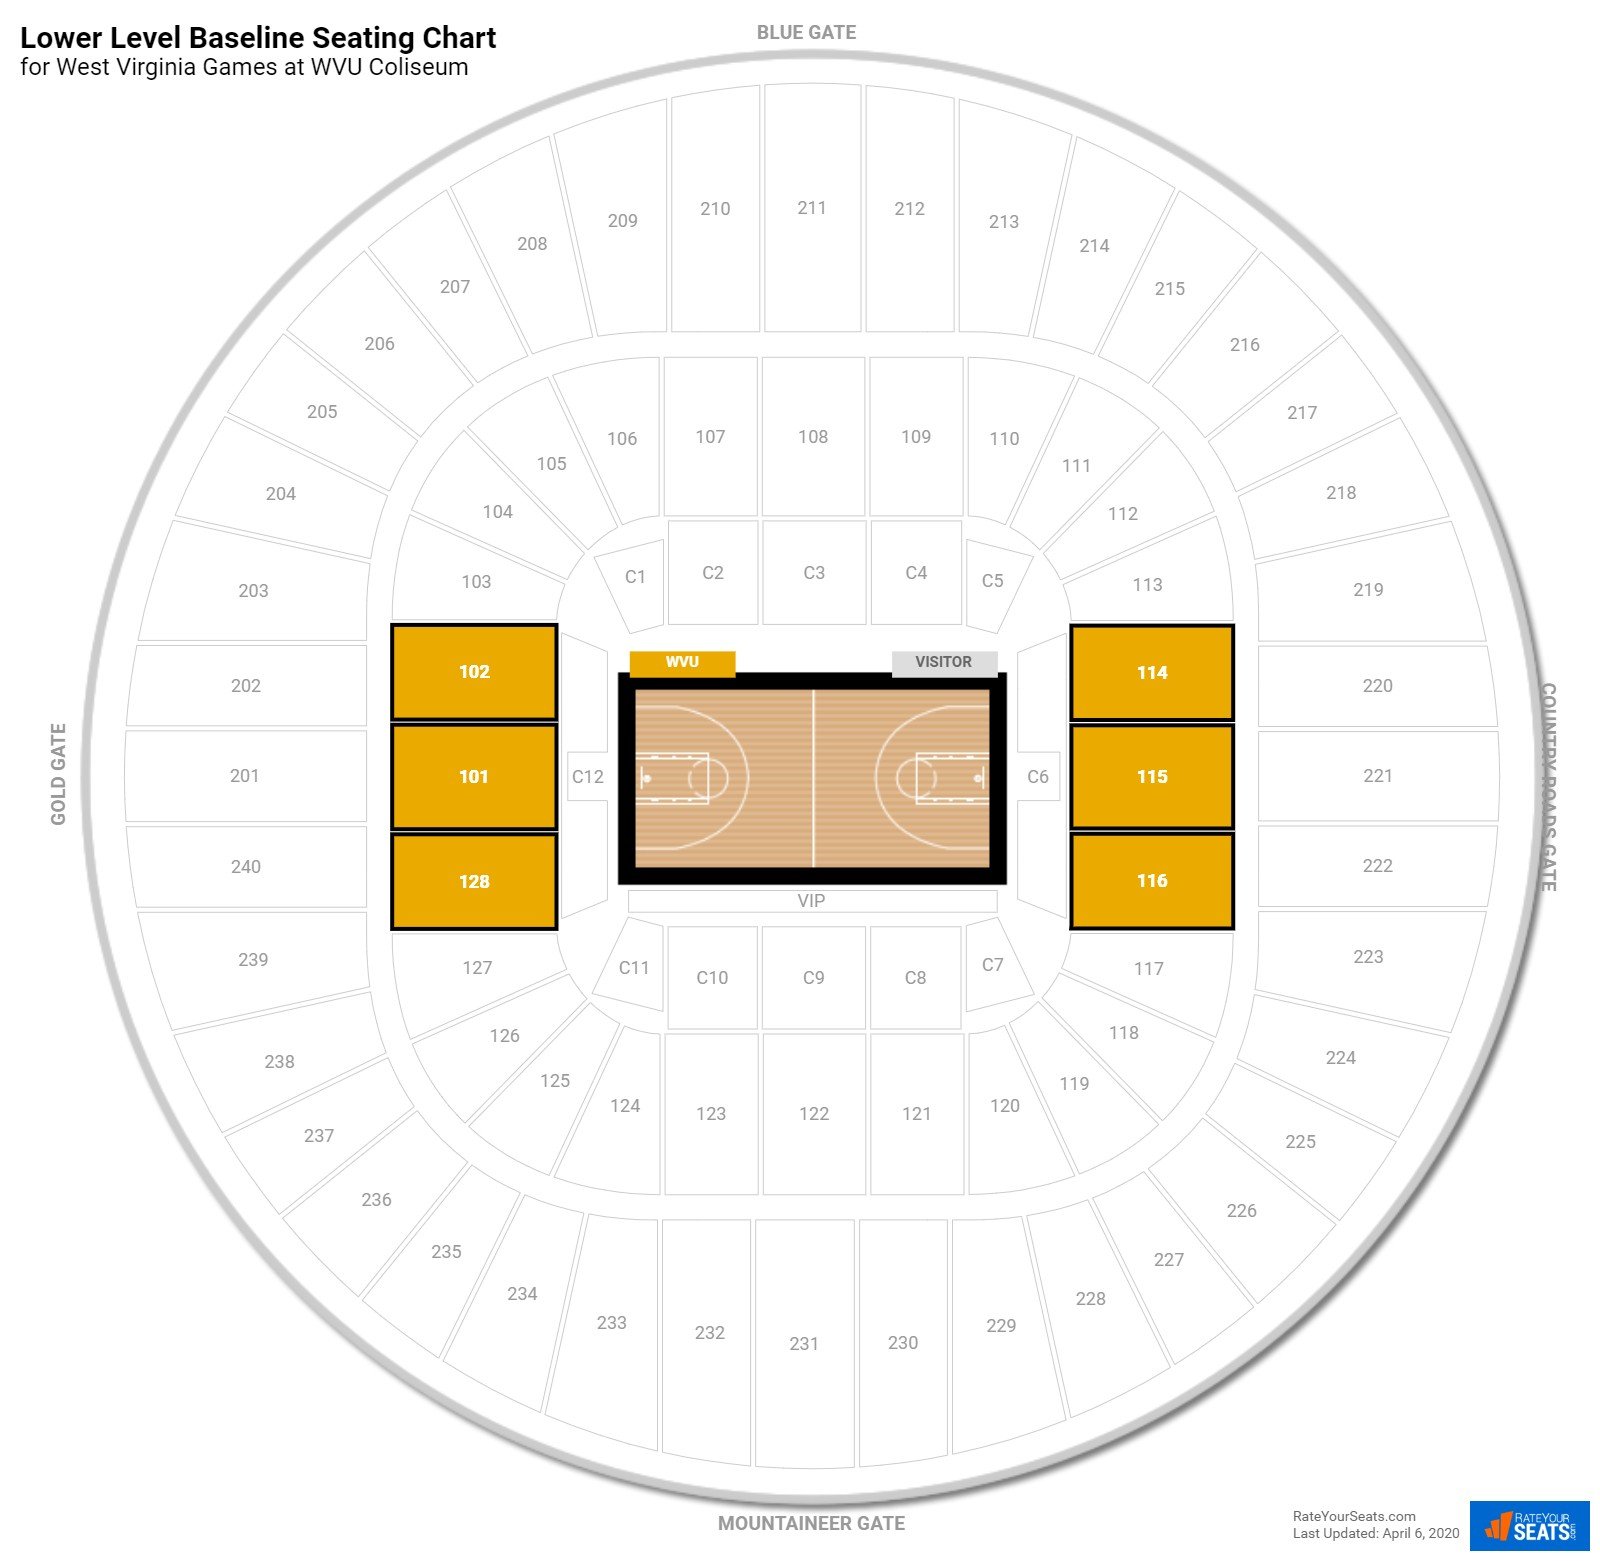 WVU Coliseum (West Virginia) Seating Guide - RateYourSeats.com